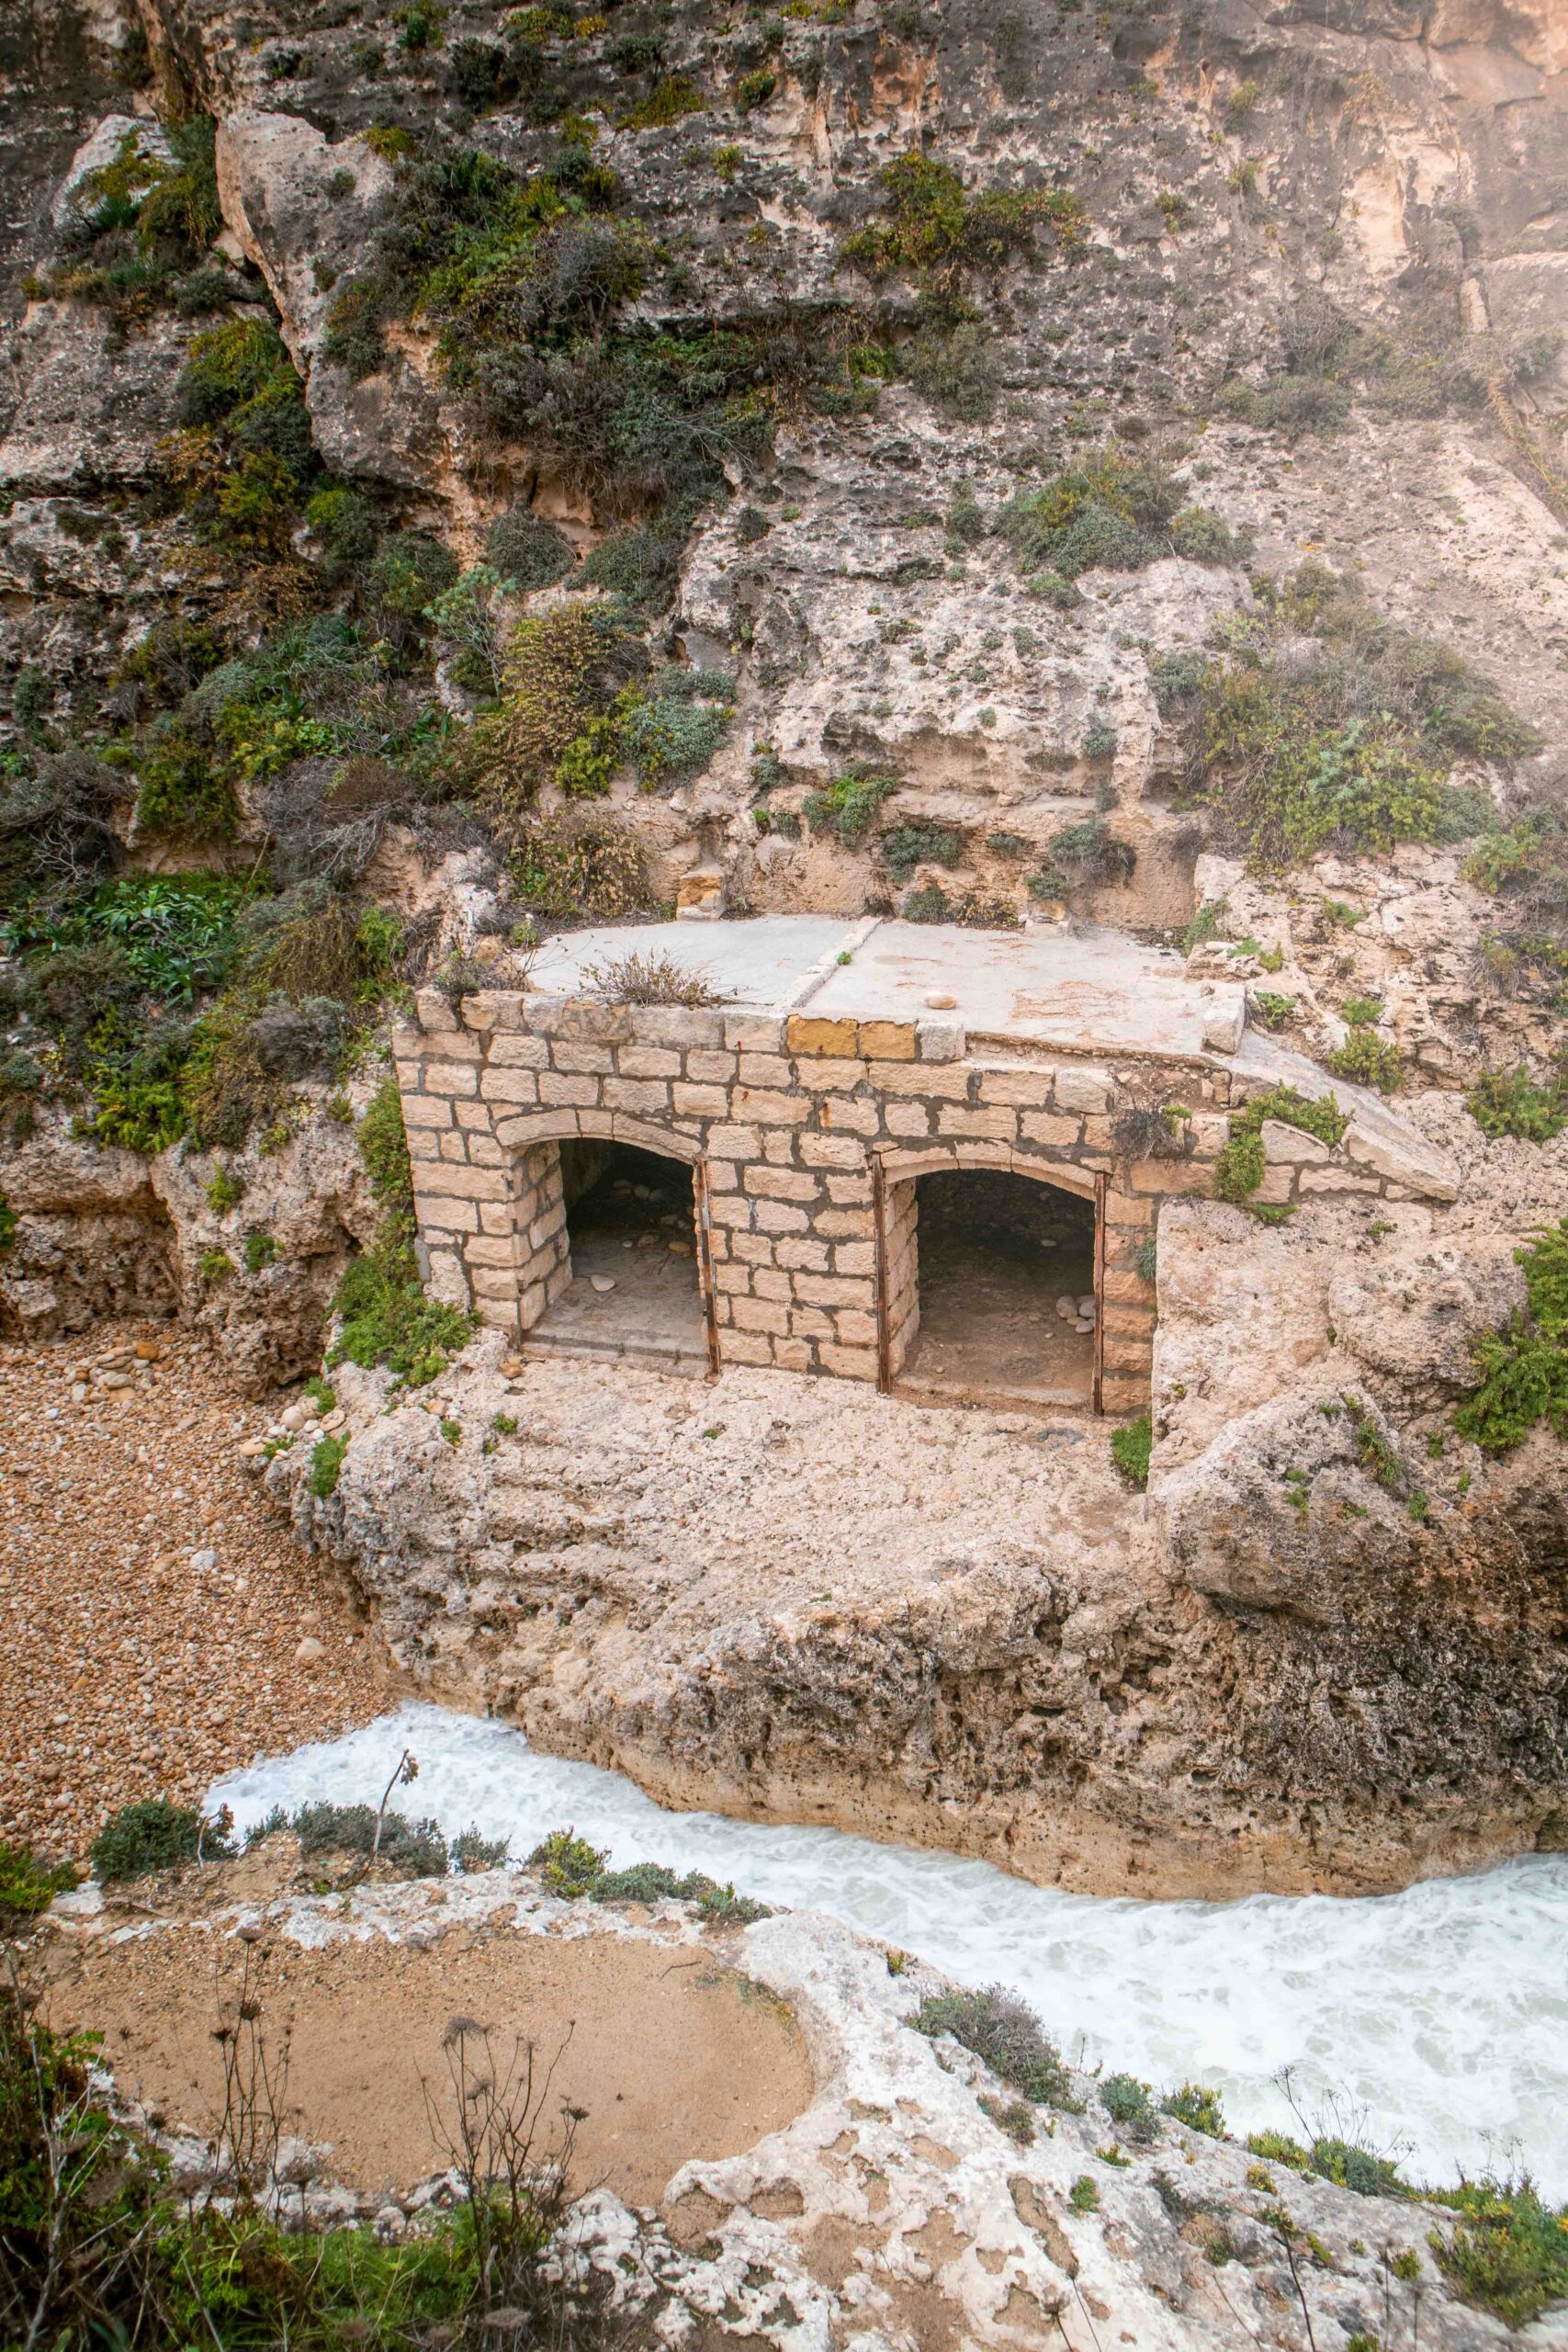 Small pebble beach and stone shelter of Wied Il-Għasri gorge on Gozo island, Malta